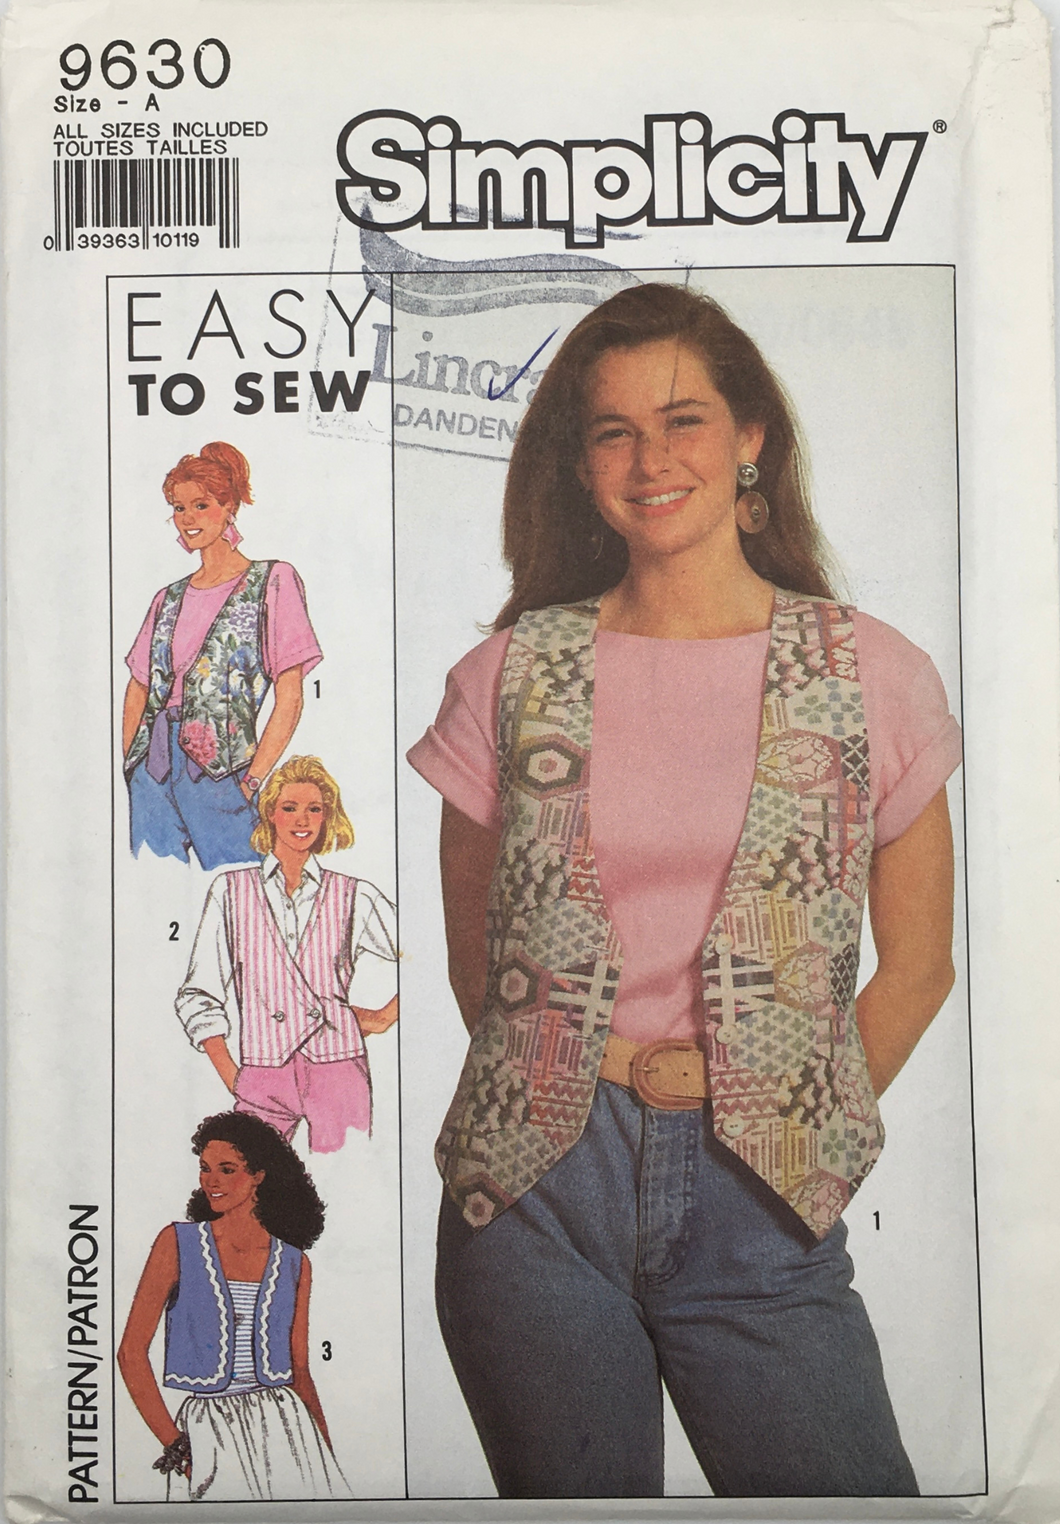 1990 Vintage Sewing Pattern: Simplicity 9630